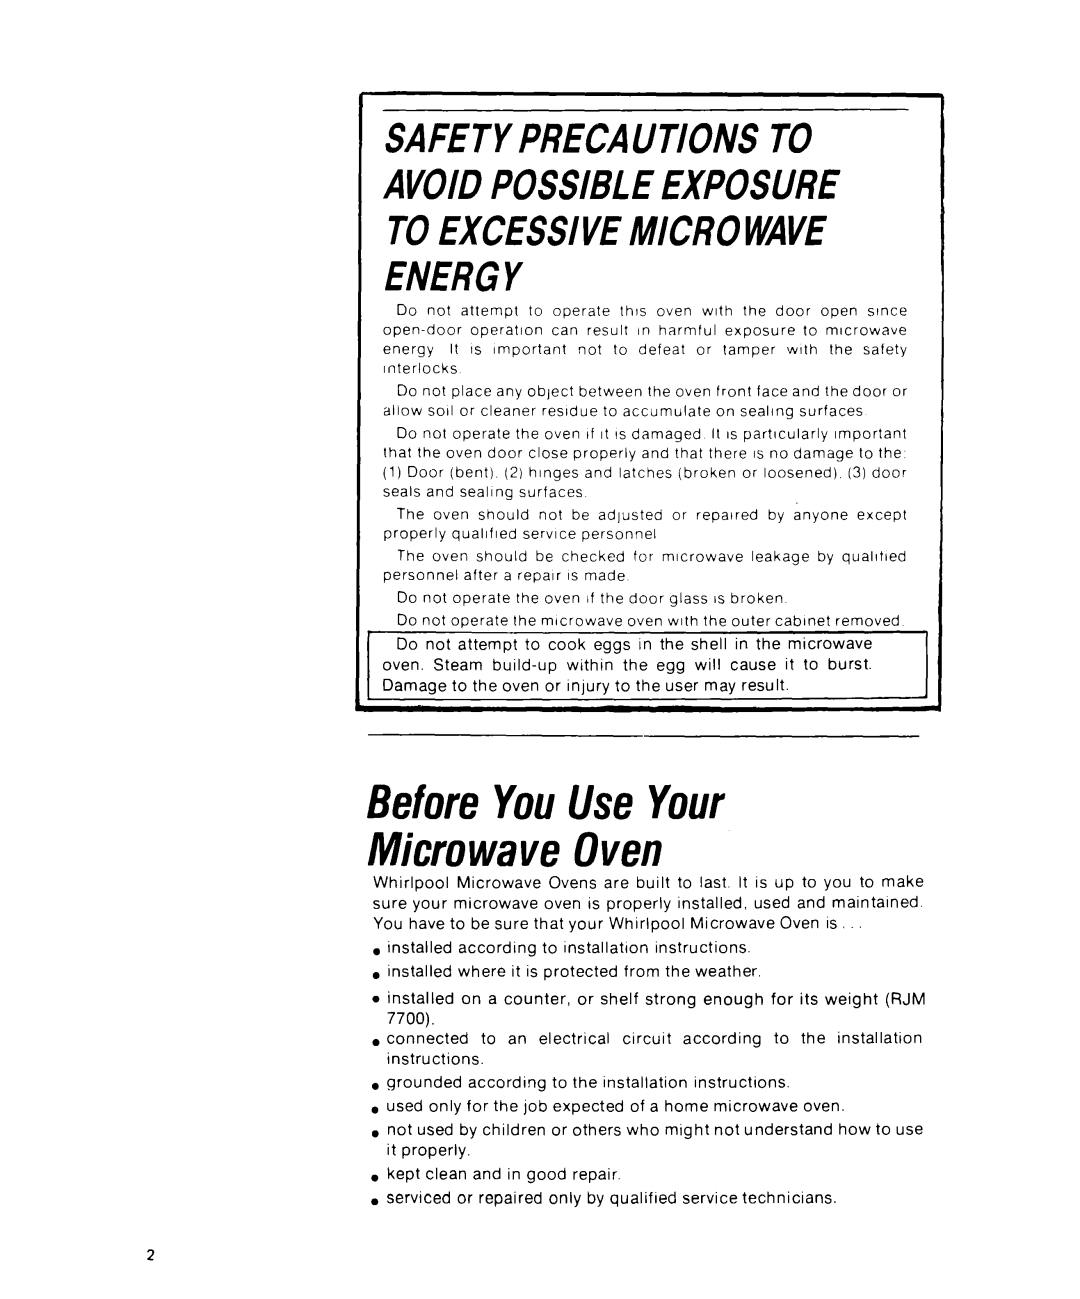 Whirlpool RJM 7700, RJM 1870 manual BeforeYouUse Your Microwave Oven, Safetyprecautionsto Avoidpossibleexposure 